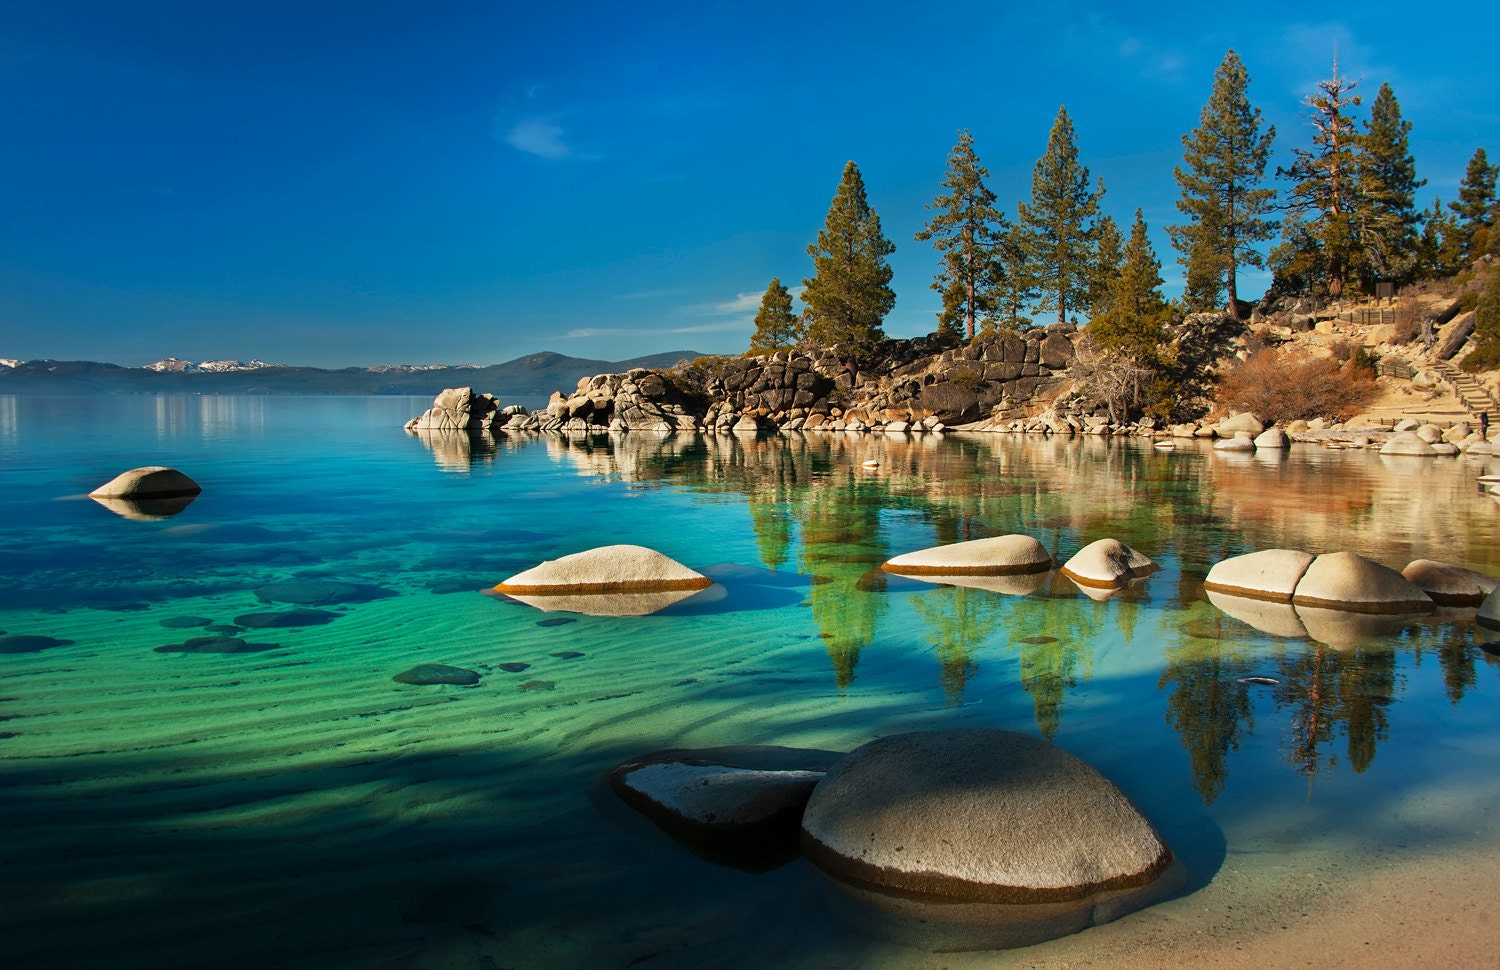 photography, Lake Tahoe, nature, landscape, fine art print, "Stepping Stones" - nataliemikaels